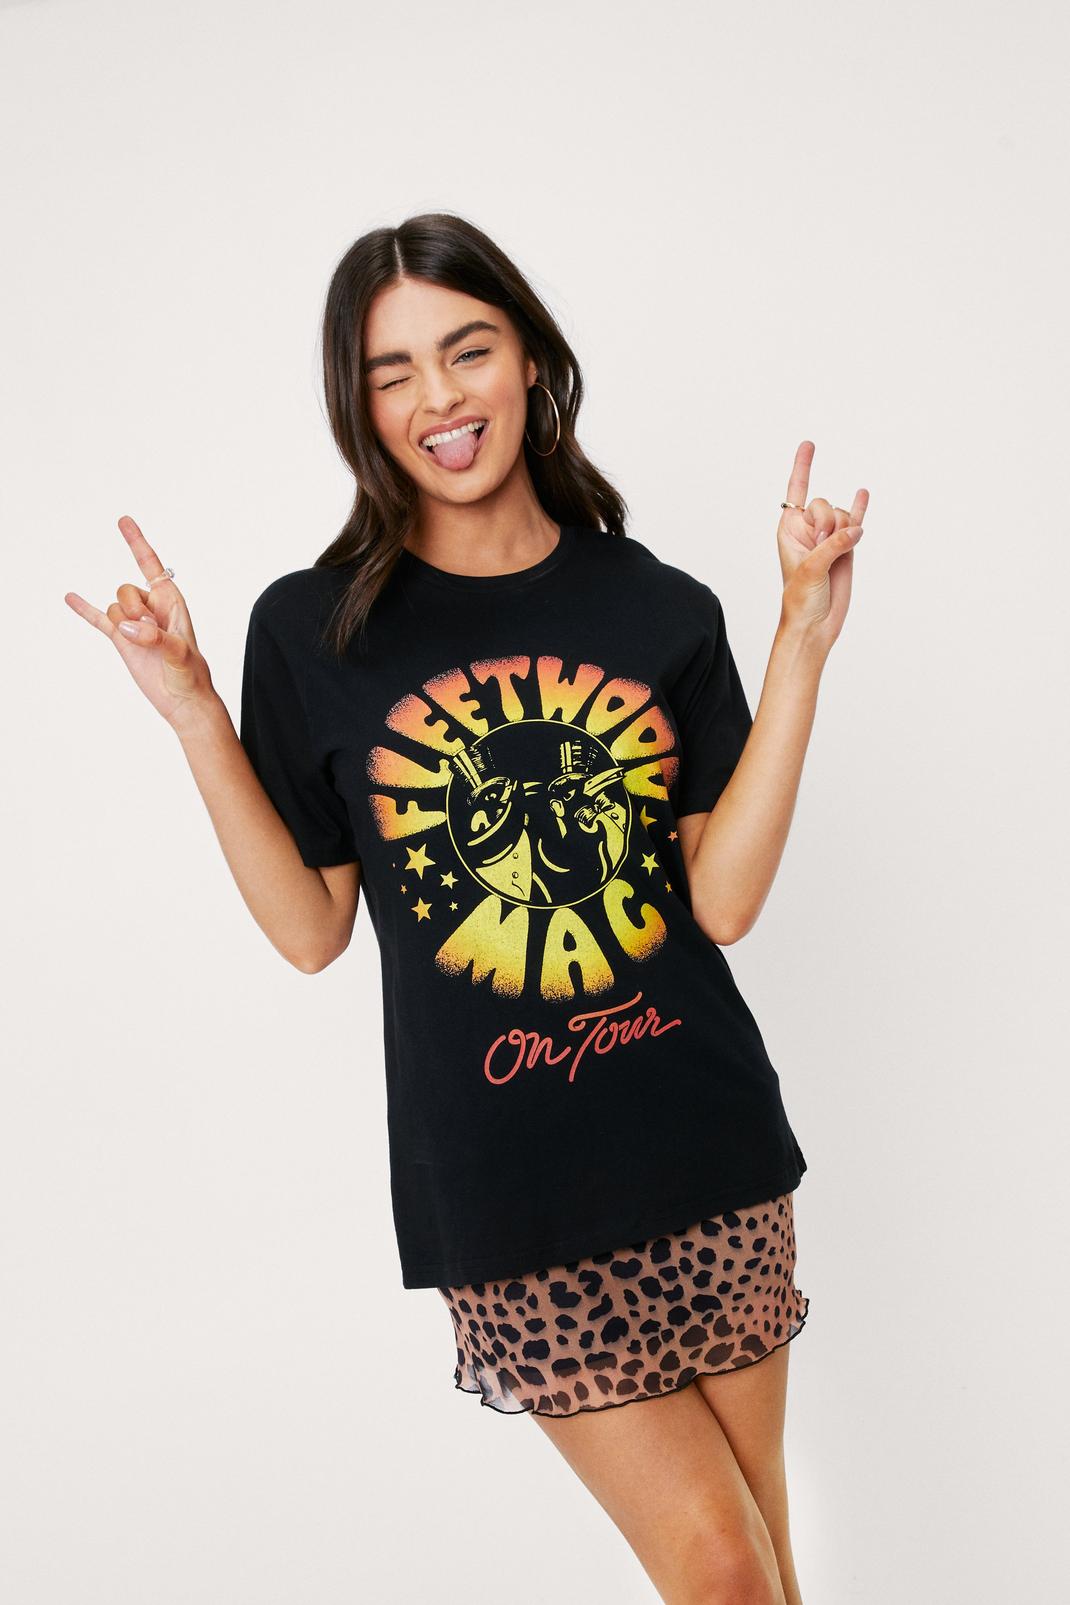 Fleetwood Mac on Tour Graphic Band T-Shirt | Nasty Gal